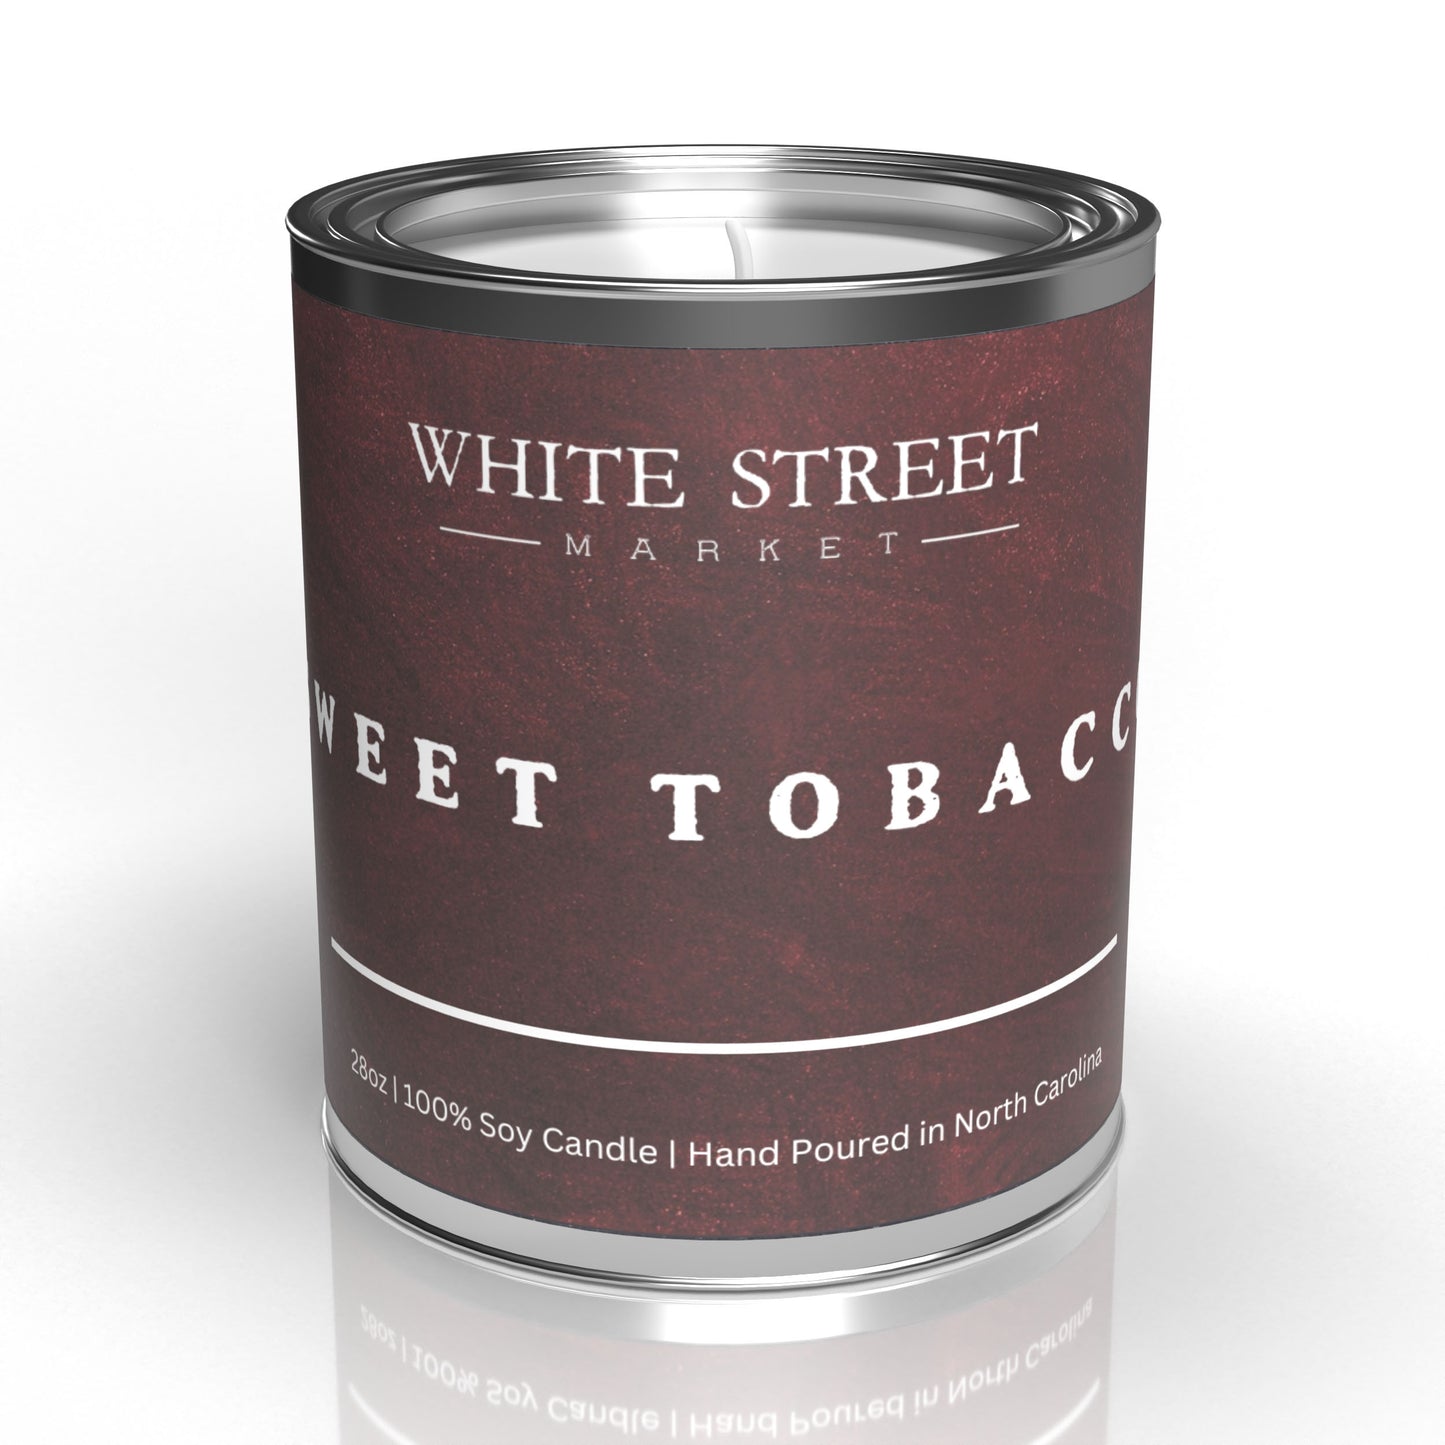 Sweet Tobacco Candle - White Street Market